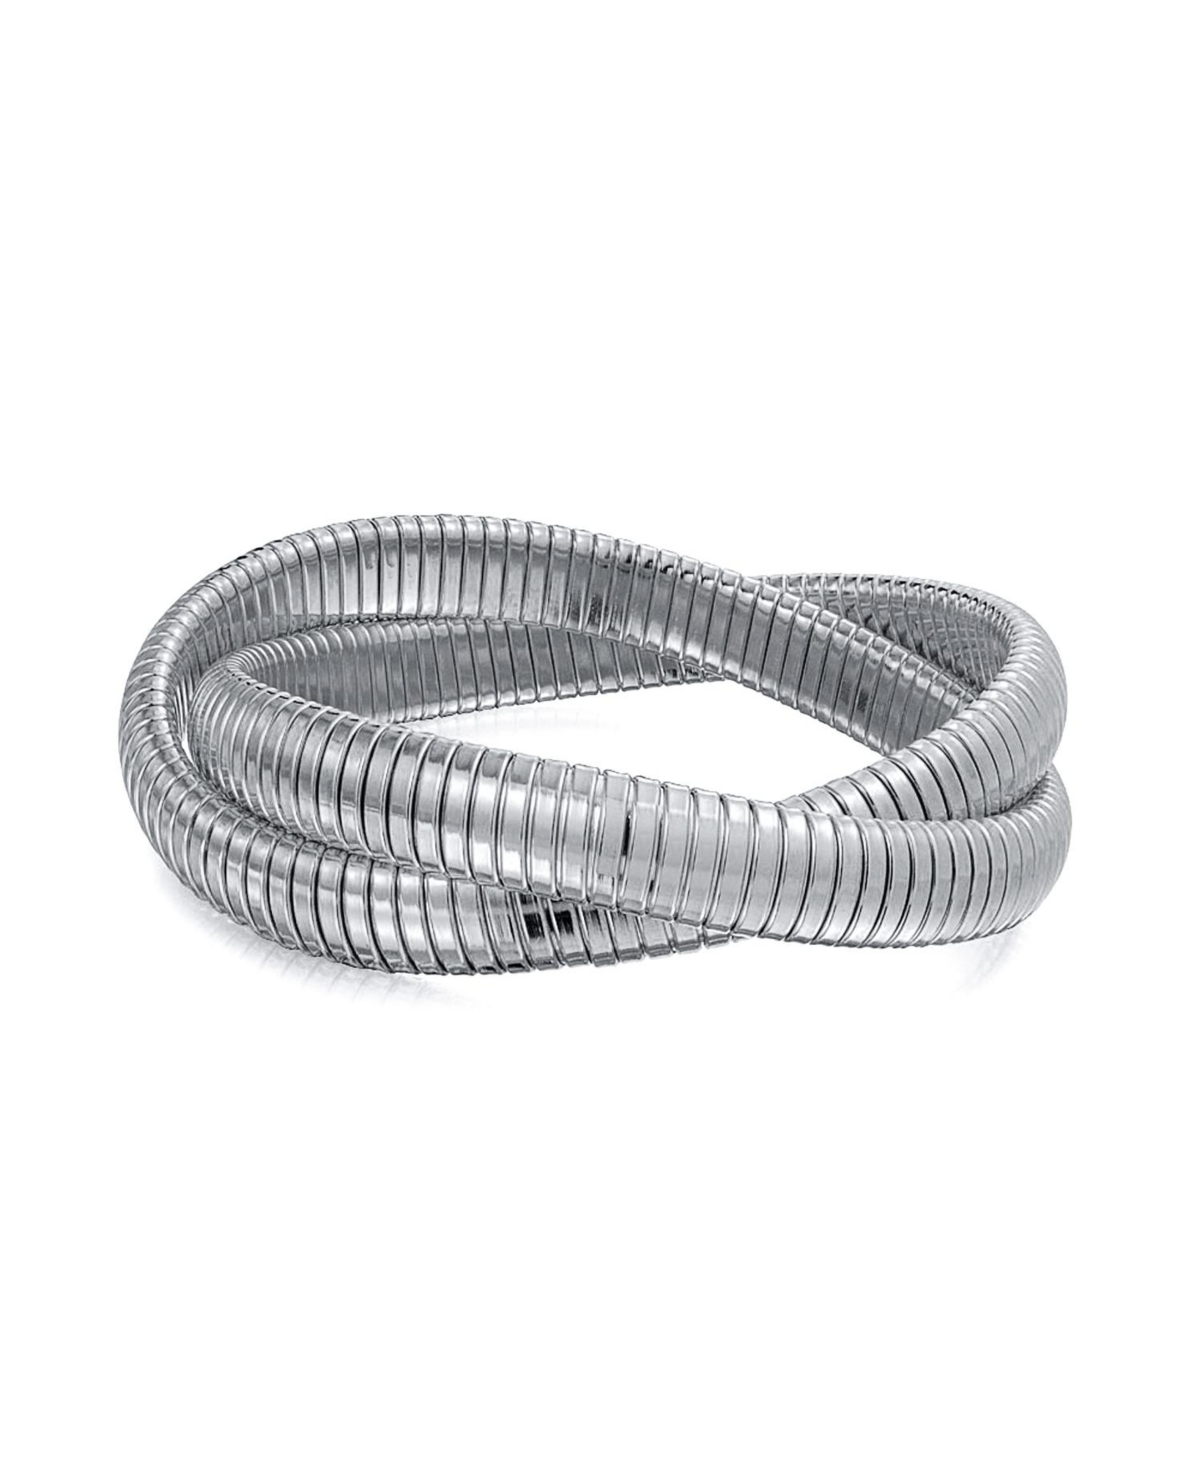 Omega Snake Cobra Wide Bangle Twisted Bracelet Bands Set Interlocking Flexible Stretch Bracelets for Women Fits 8 to 8.5 inches Wrist - Silver tone